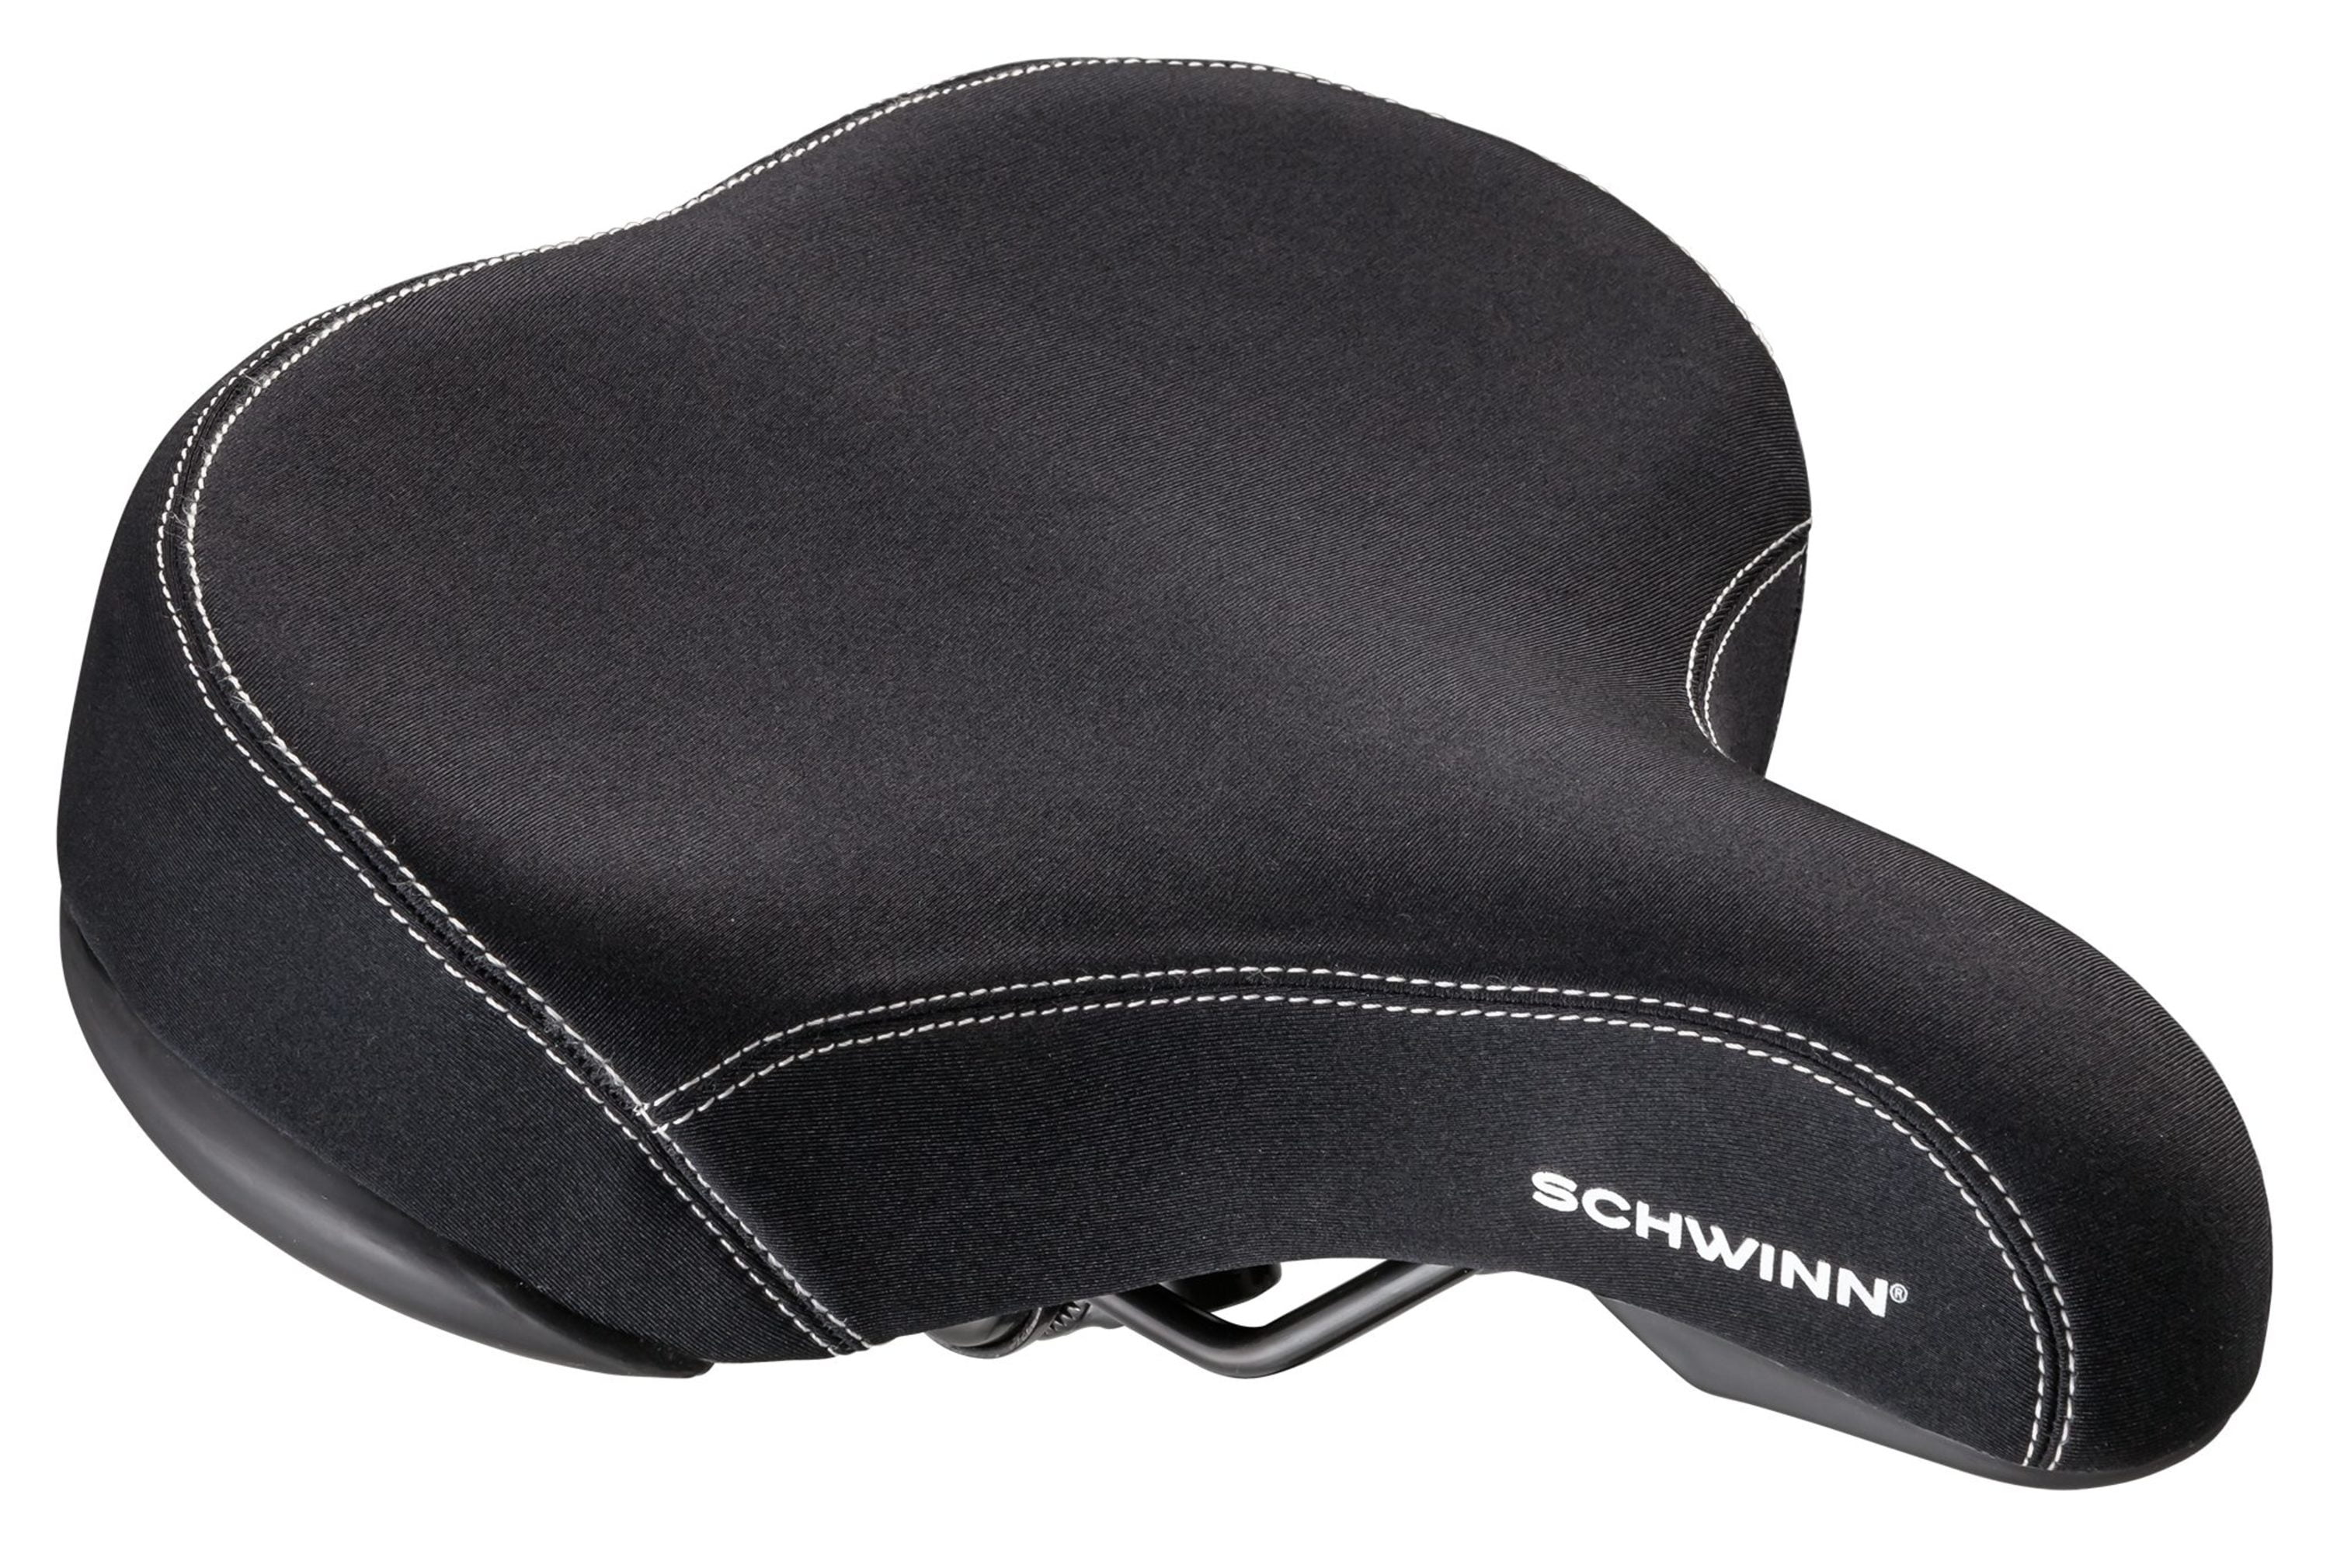 Schwinn Quilted Wide Cruiser Saddle Bicycle Bike Extra Soft Foam Seat Cushy NEW. 